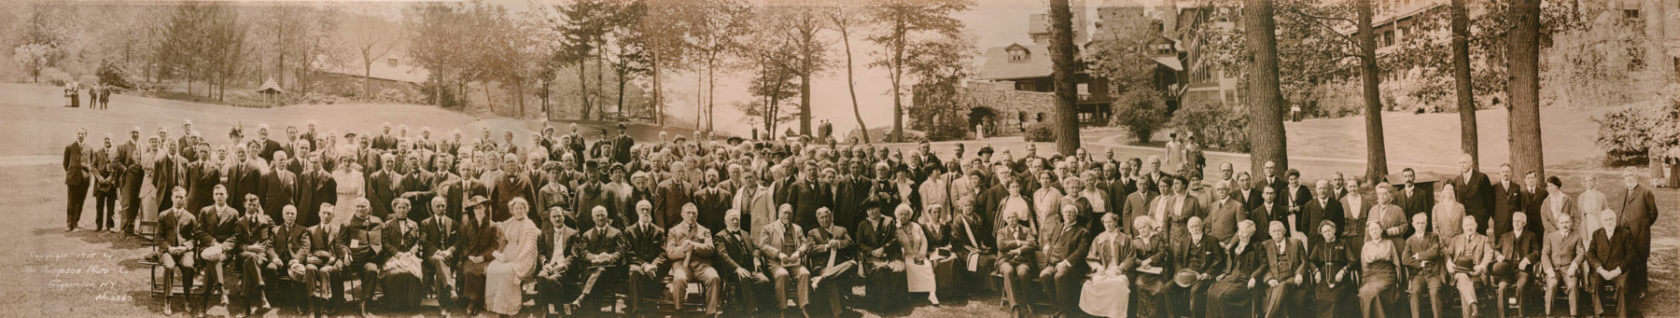 Conference on International Arbitration, 1915